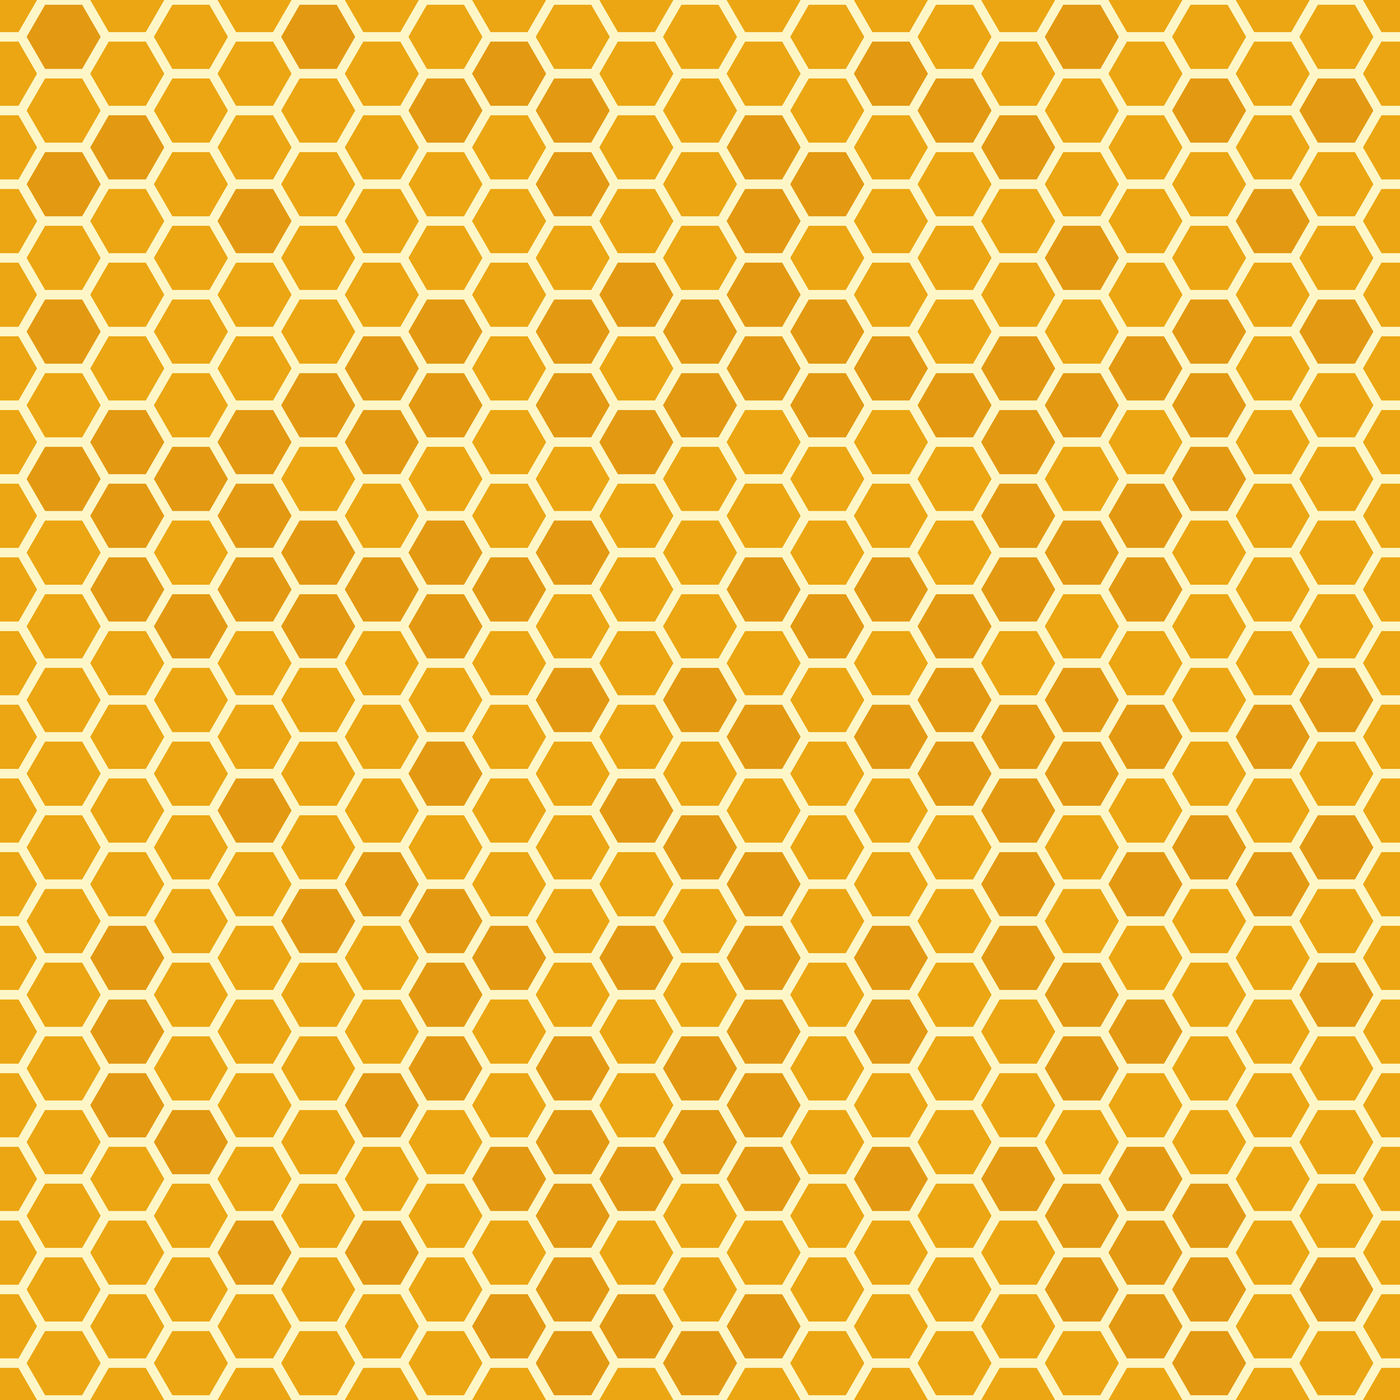 Honeycomb Seamless Texture